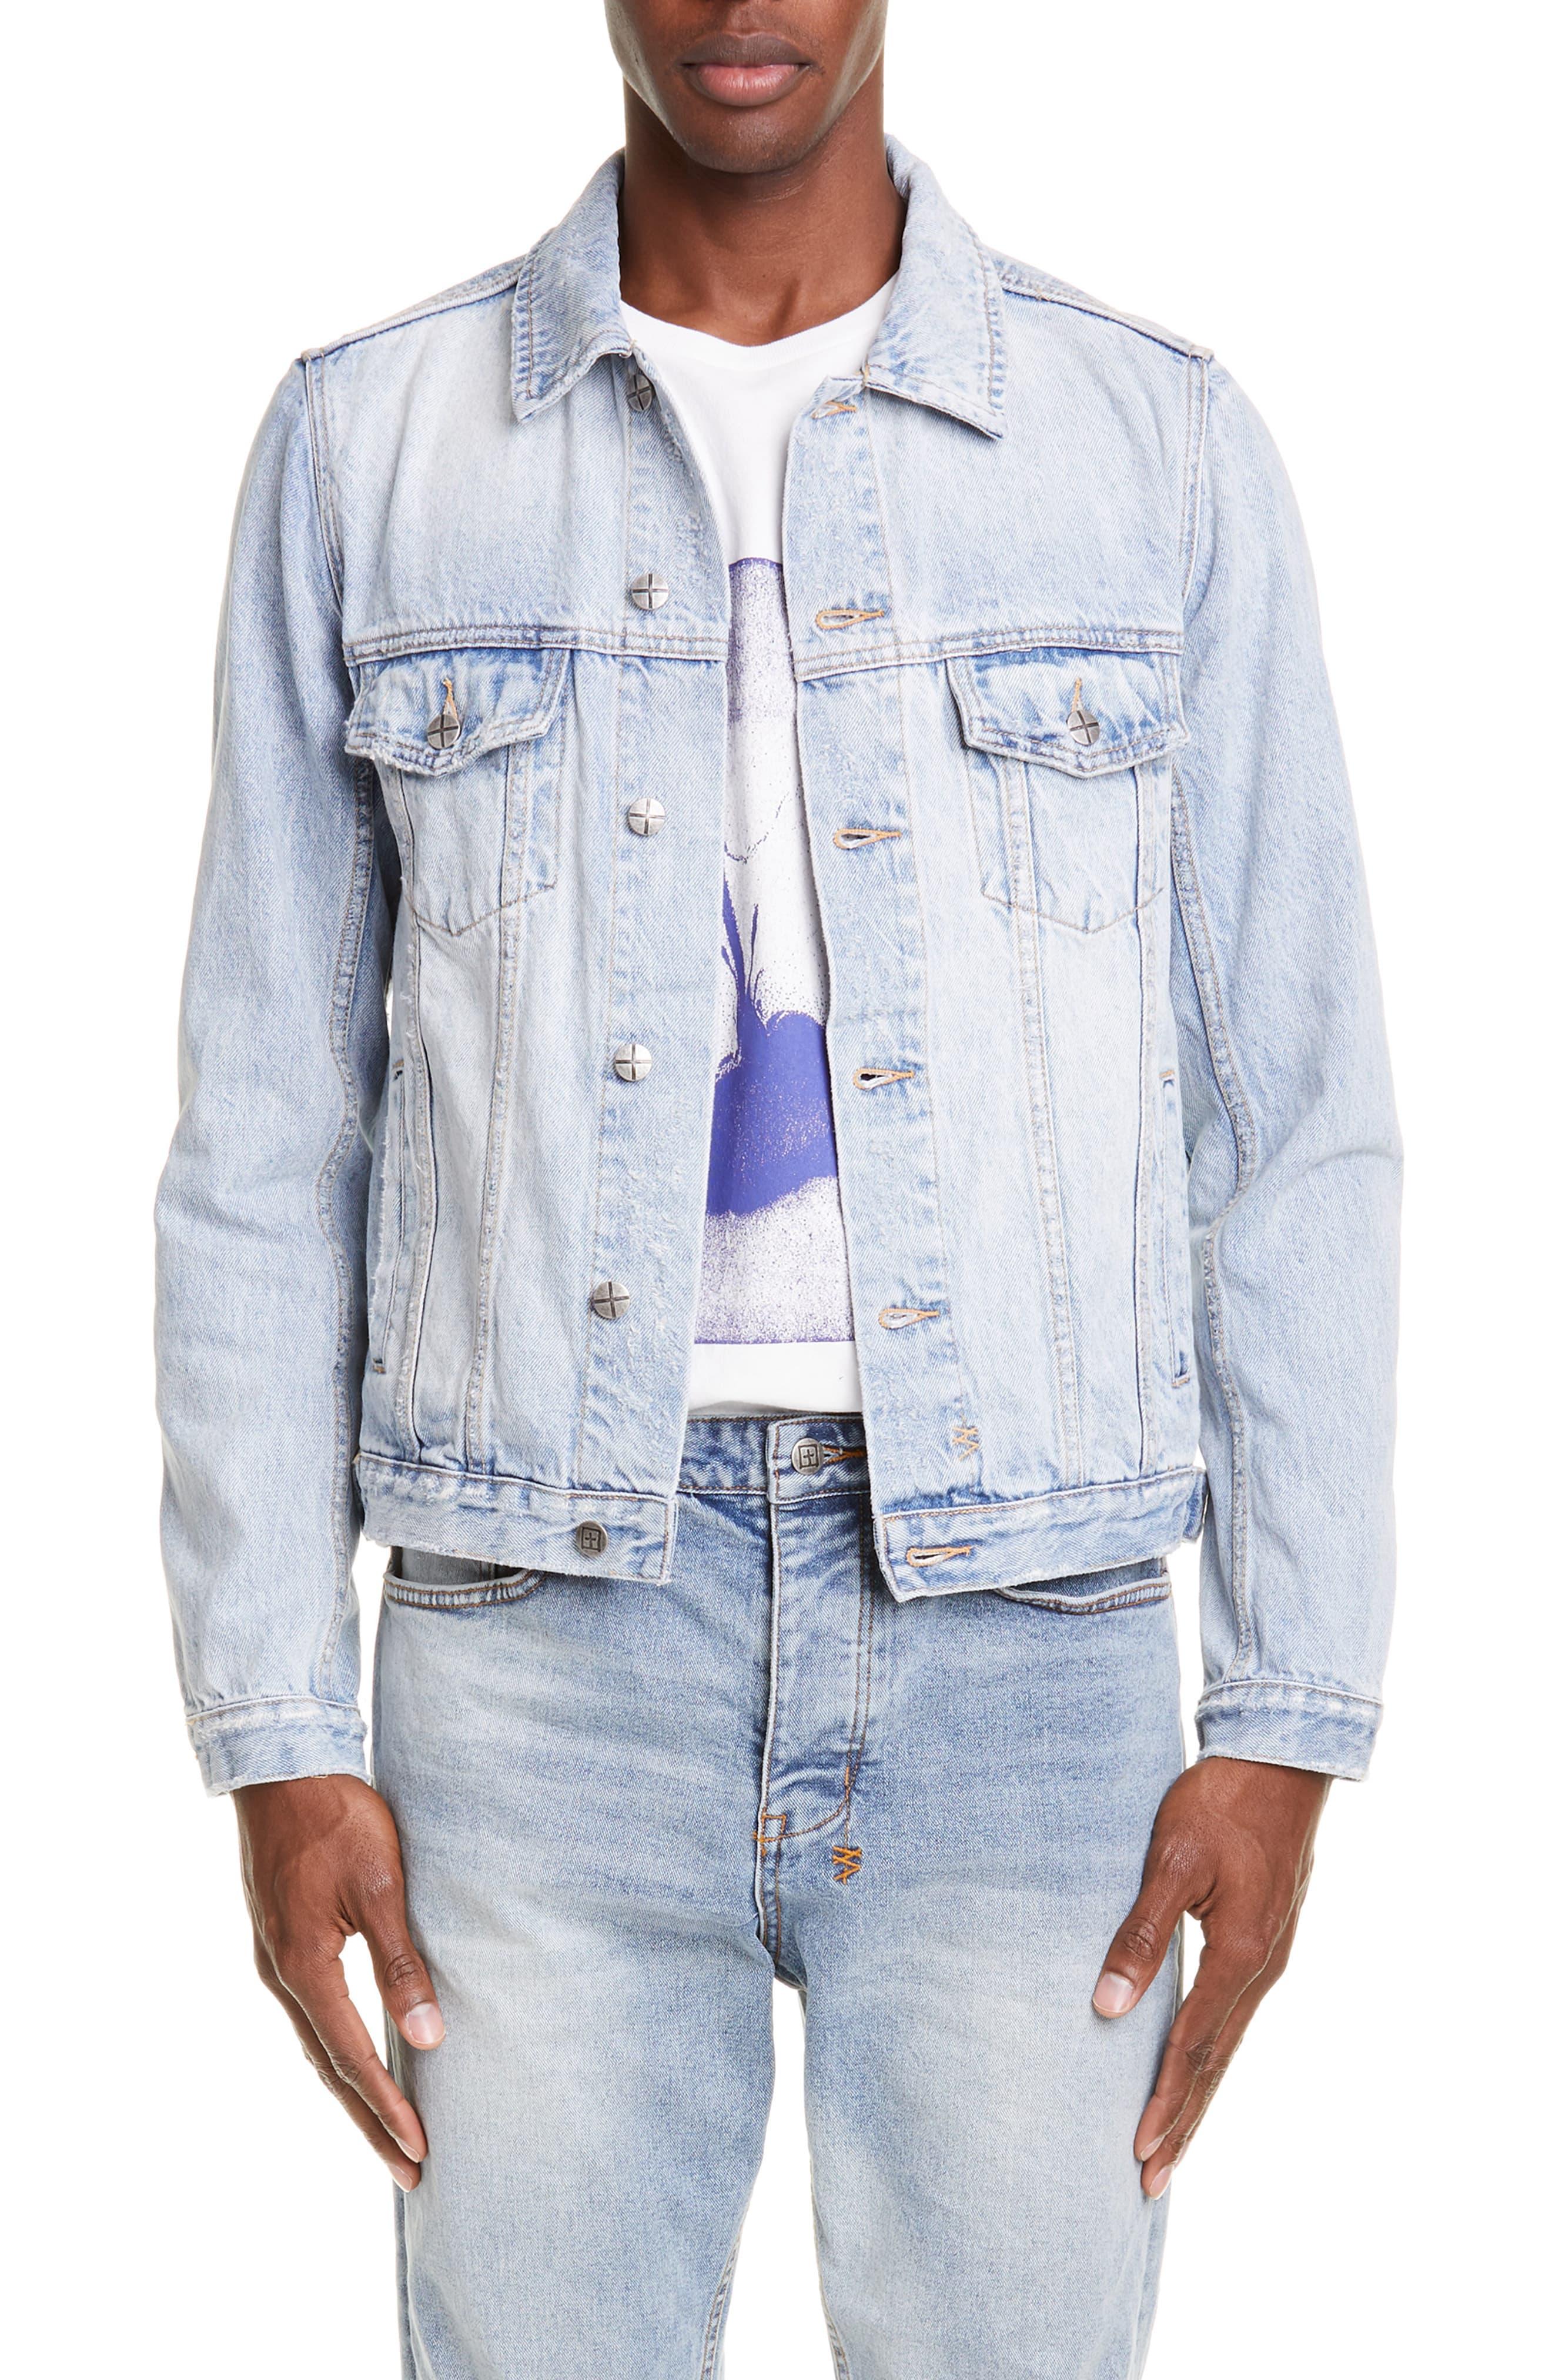 Ksubi Karma Denim Jacket in Blue for Men - Lyst